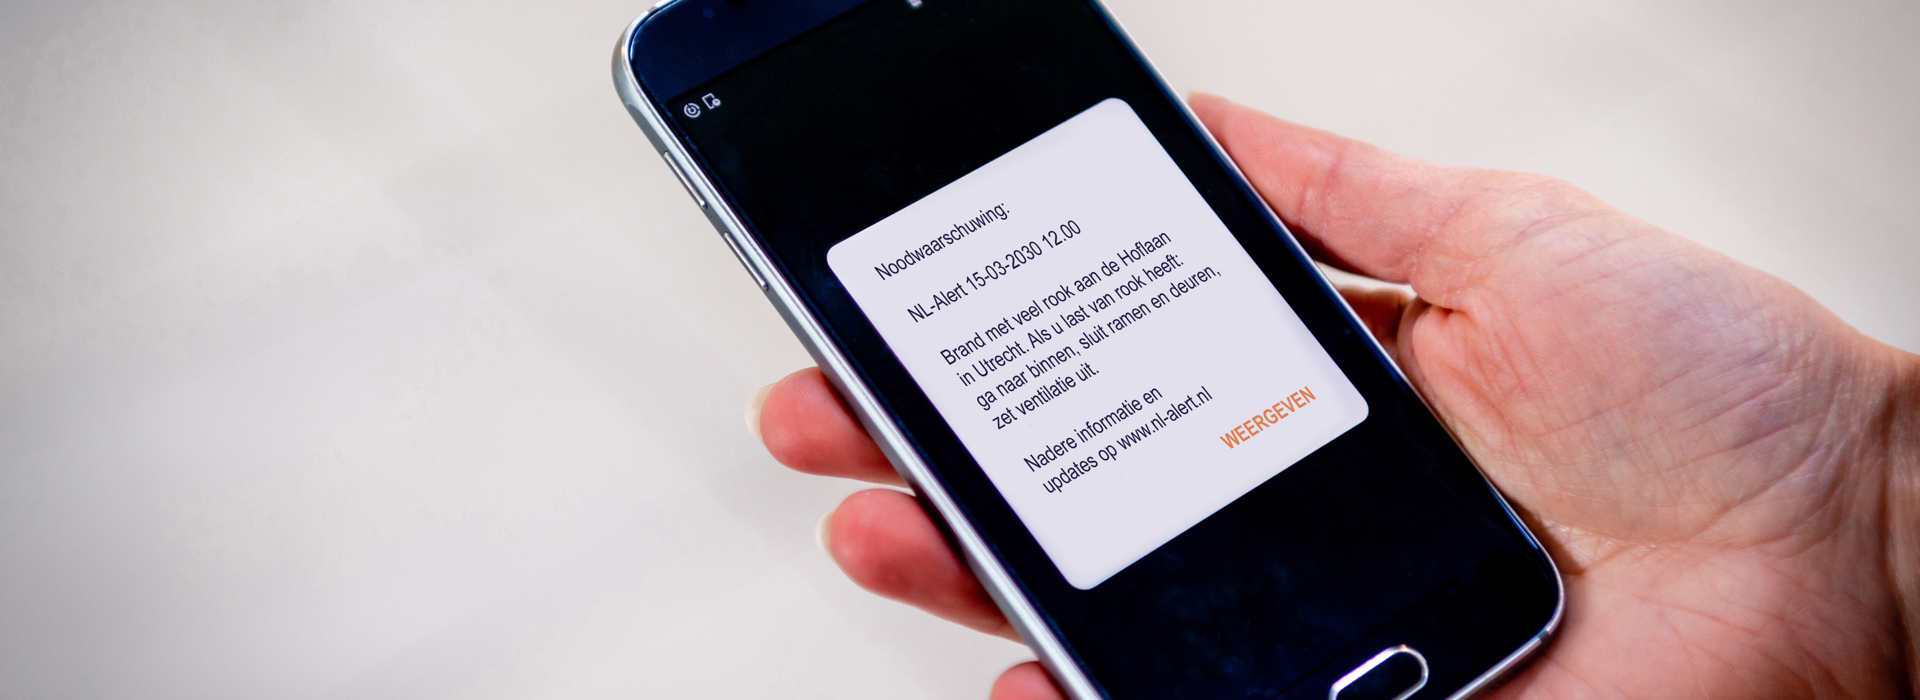 Mobiele telefoon met NL-Alert melding